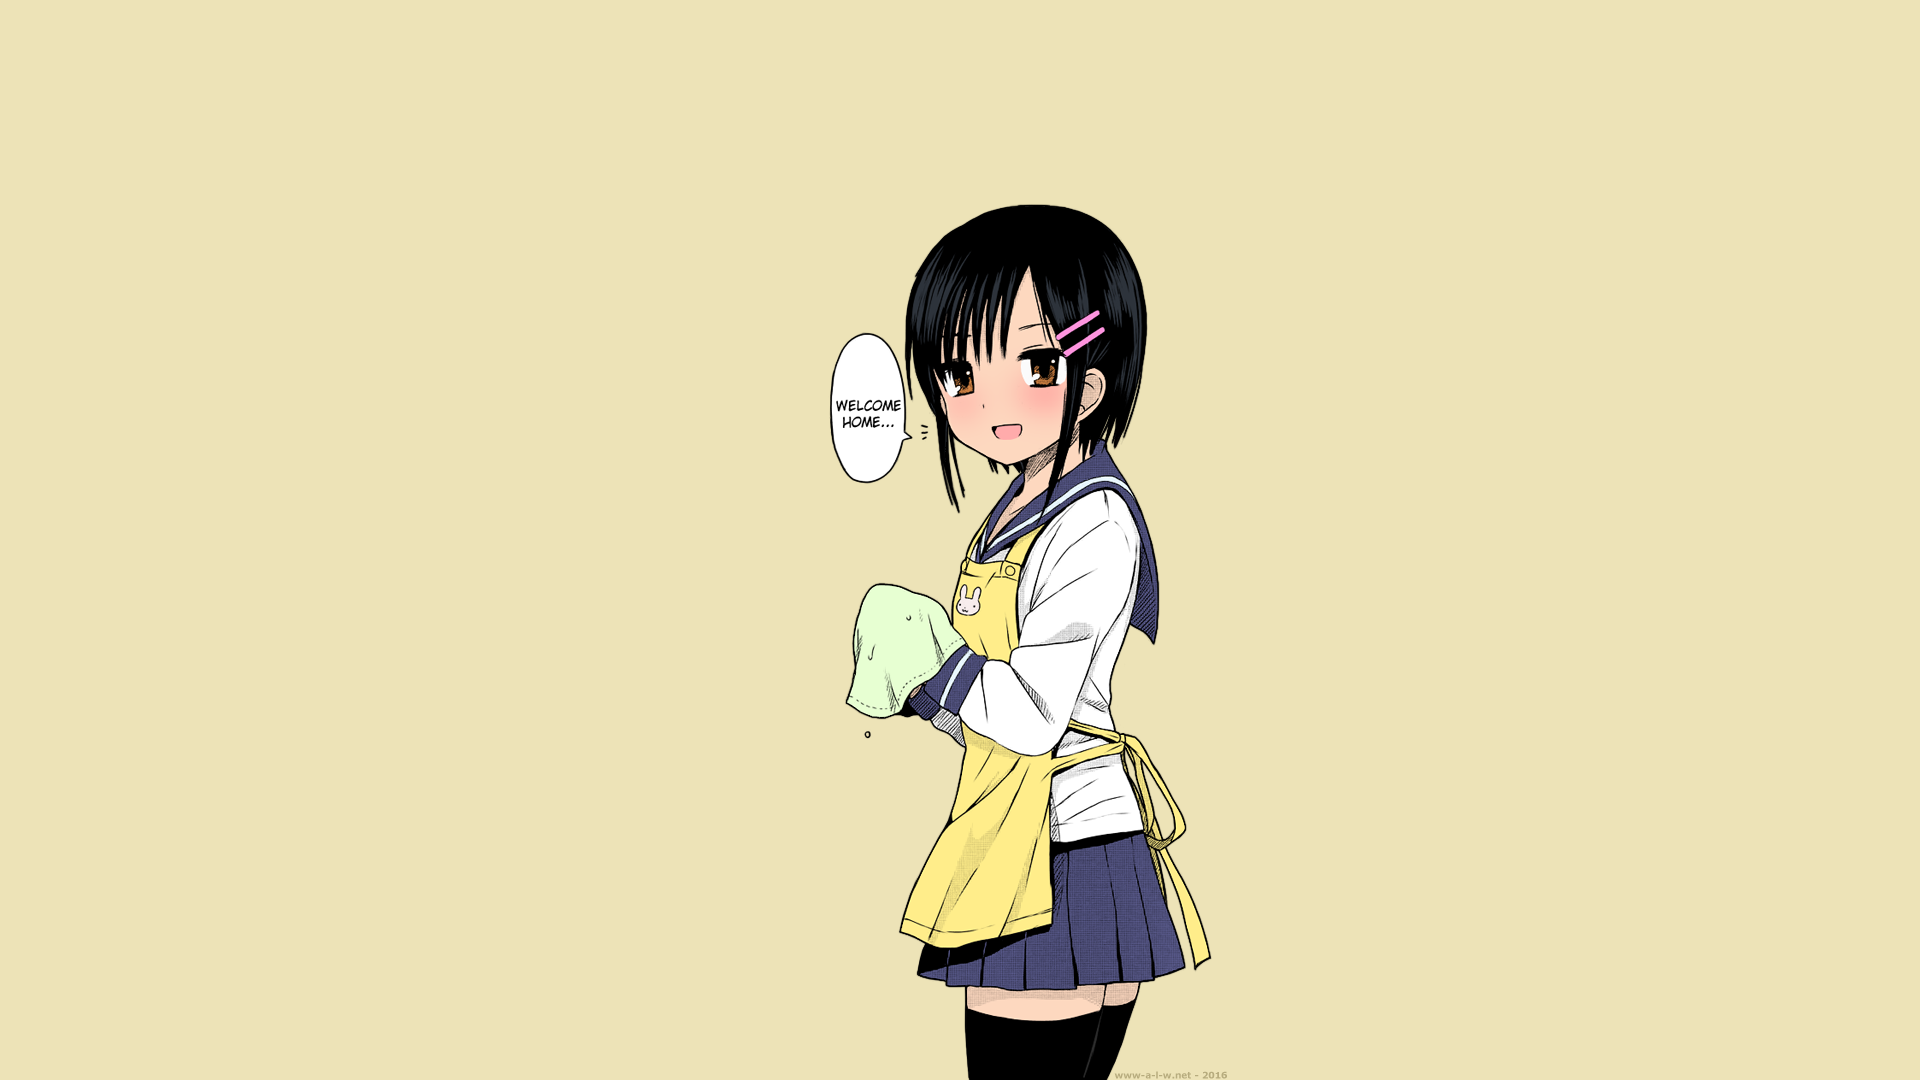 Anime 1920x1080 short hair black hair miniskirt school uniform schoolgirl apron smiling brown eyes stockings anime manga anime girls thigh-highs